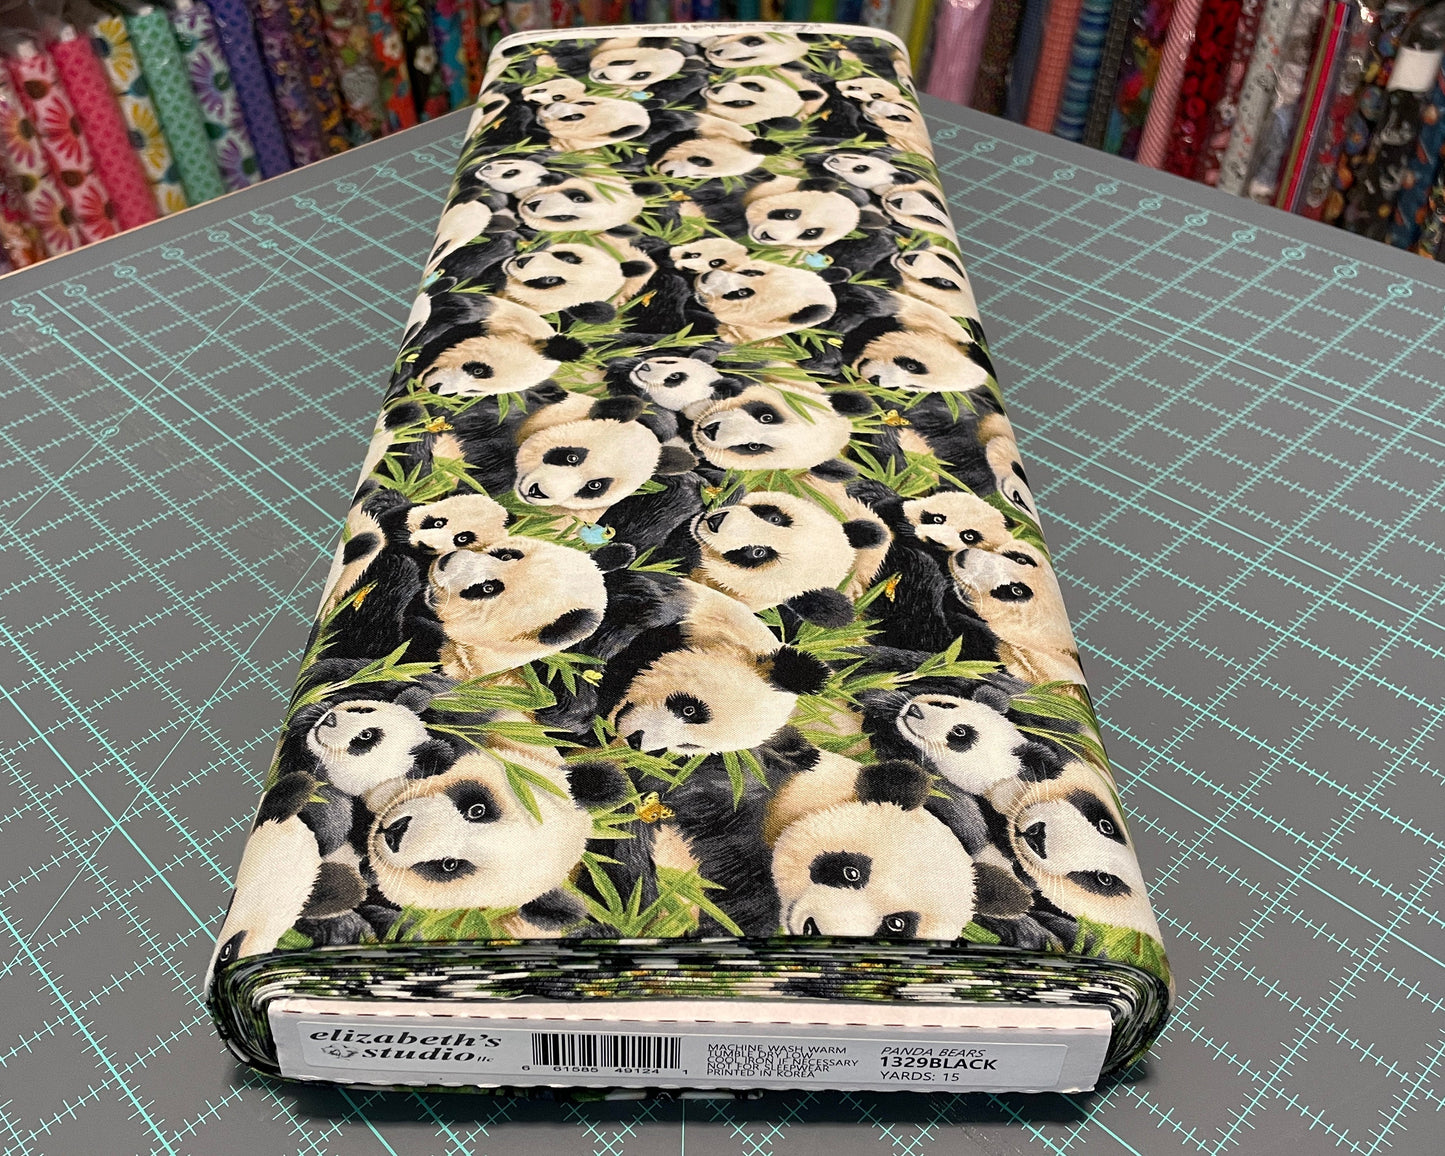 Panda Bear Fabric - 100% cotton - Elizabeth's Studio - baby panda material animal theme fabric bamboo butterfly and bird - SHIPS NEXT DAY